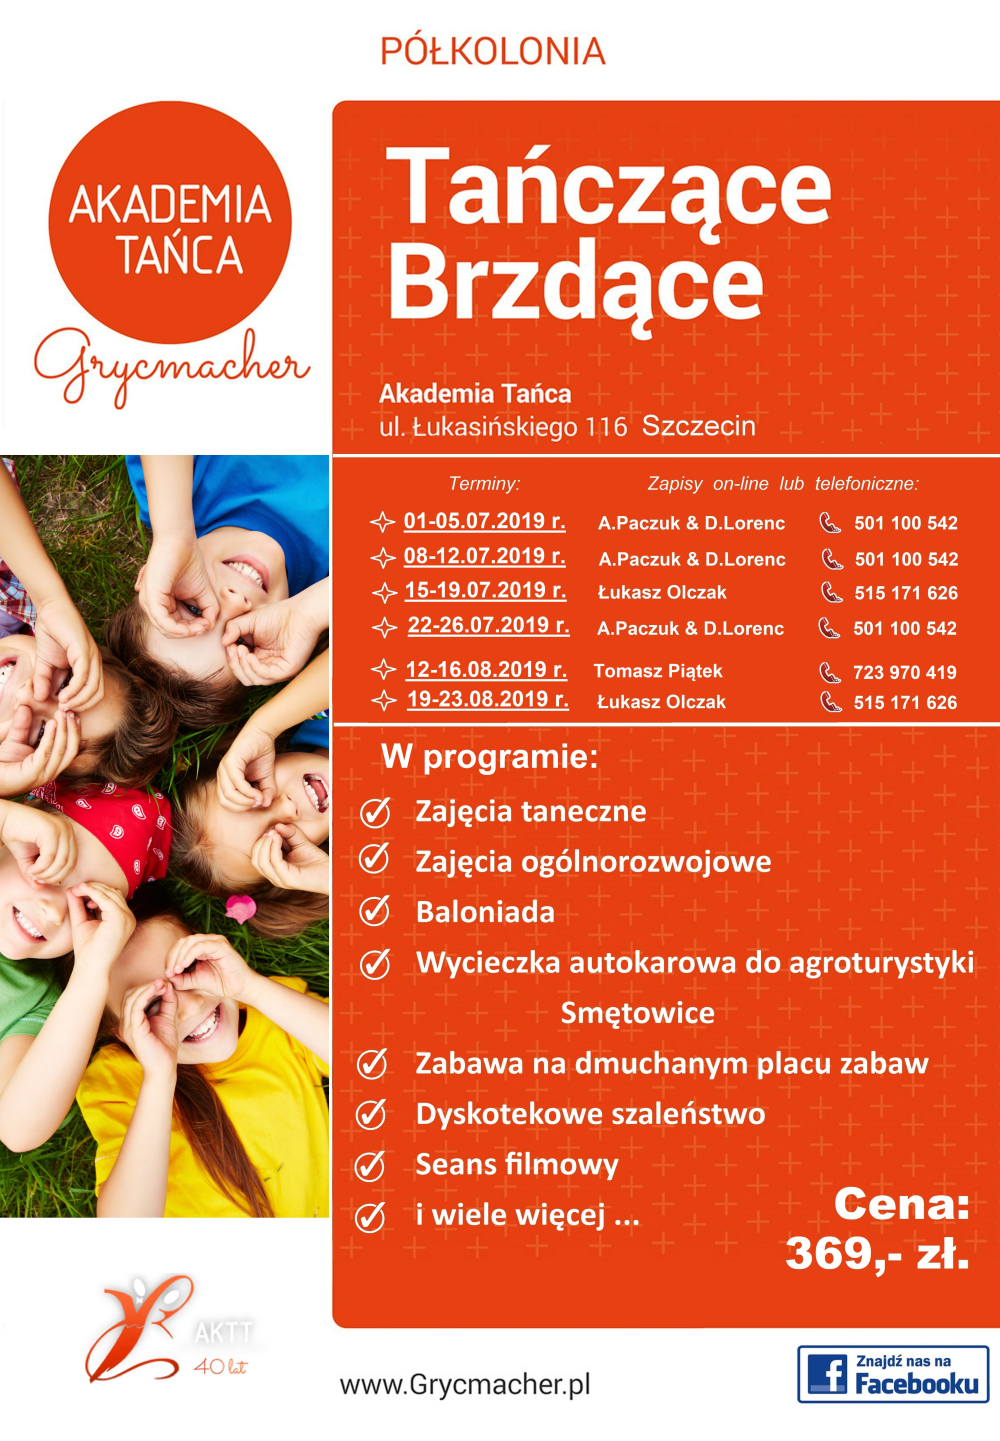 2.Tanczace_Brzdace-plakat_2b-1000.png